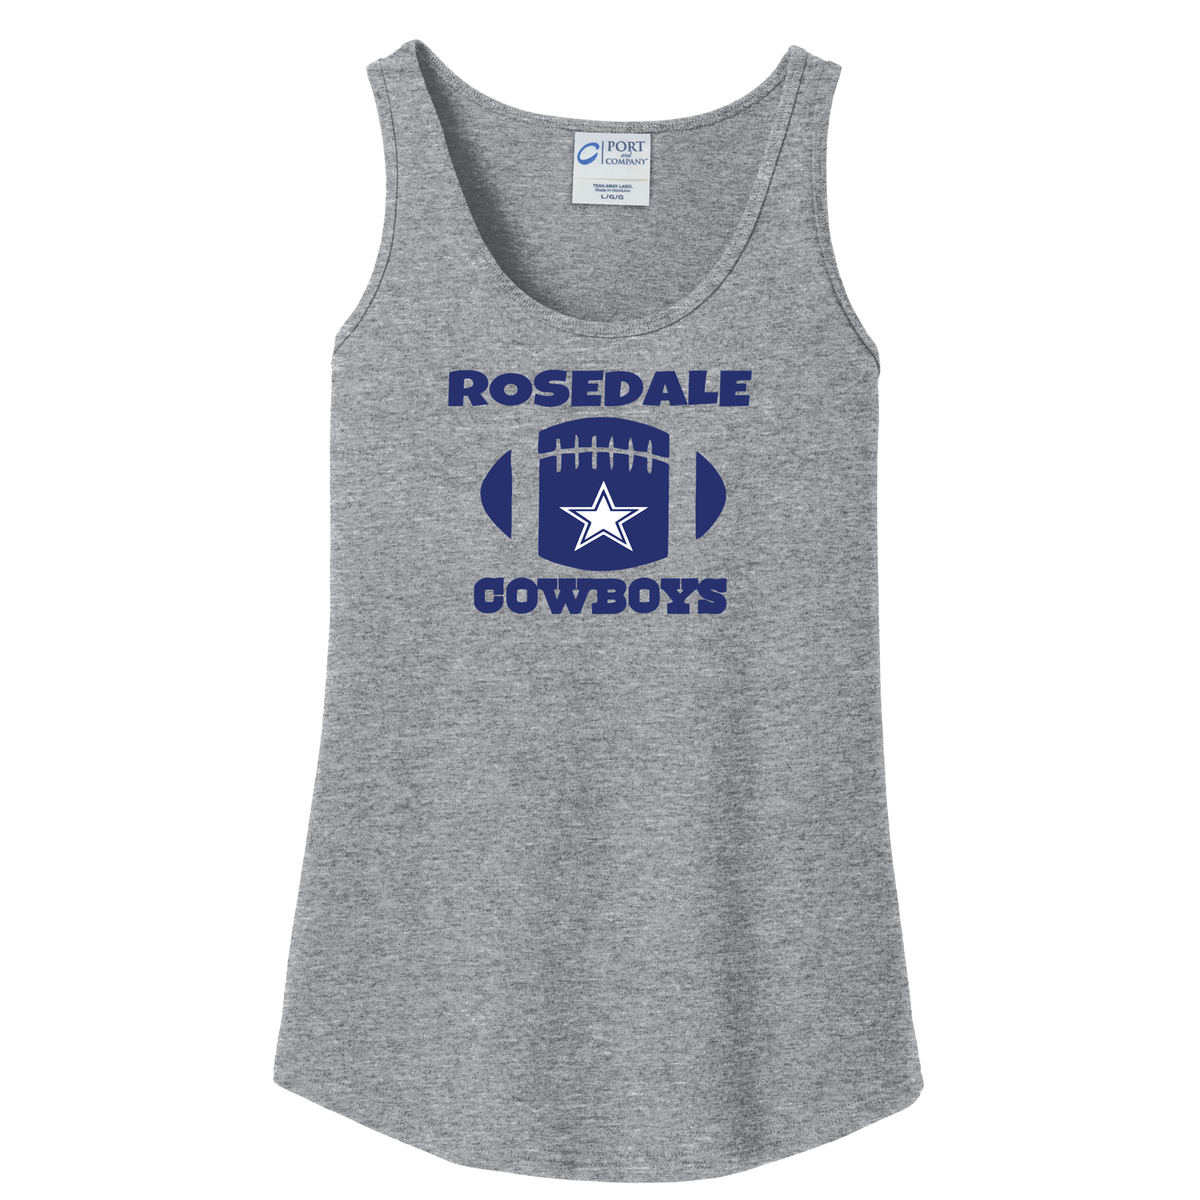 Rosedale Cowboys Women's Tank Top